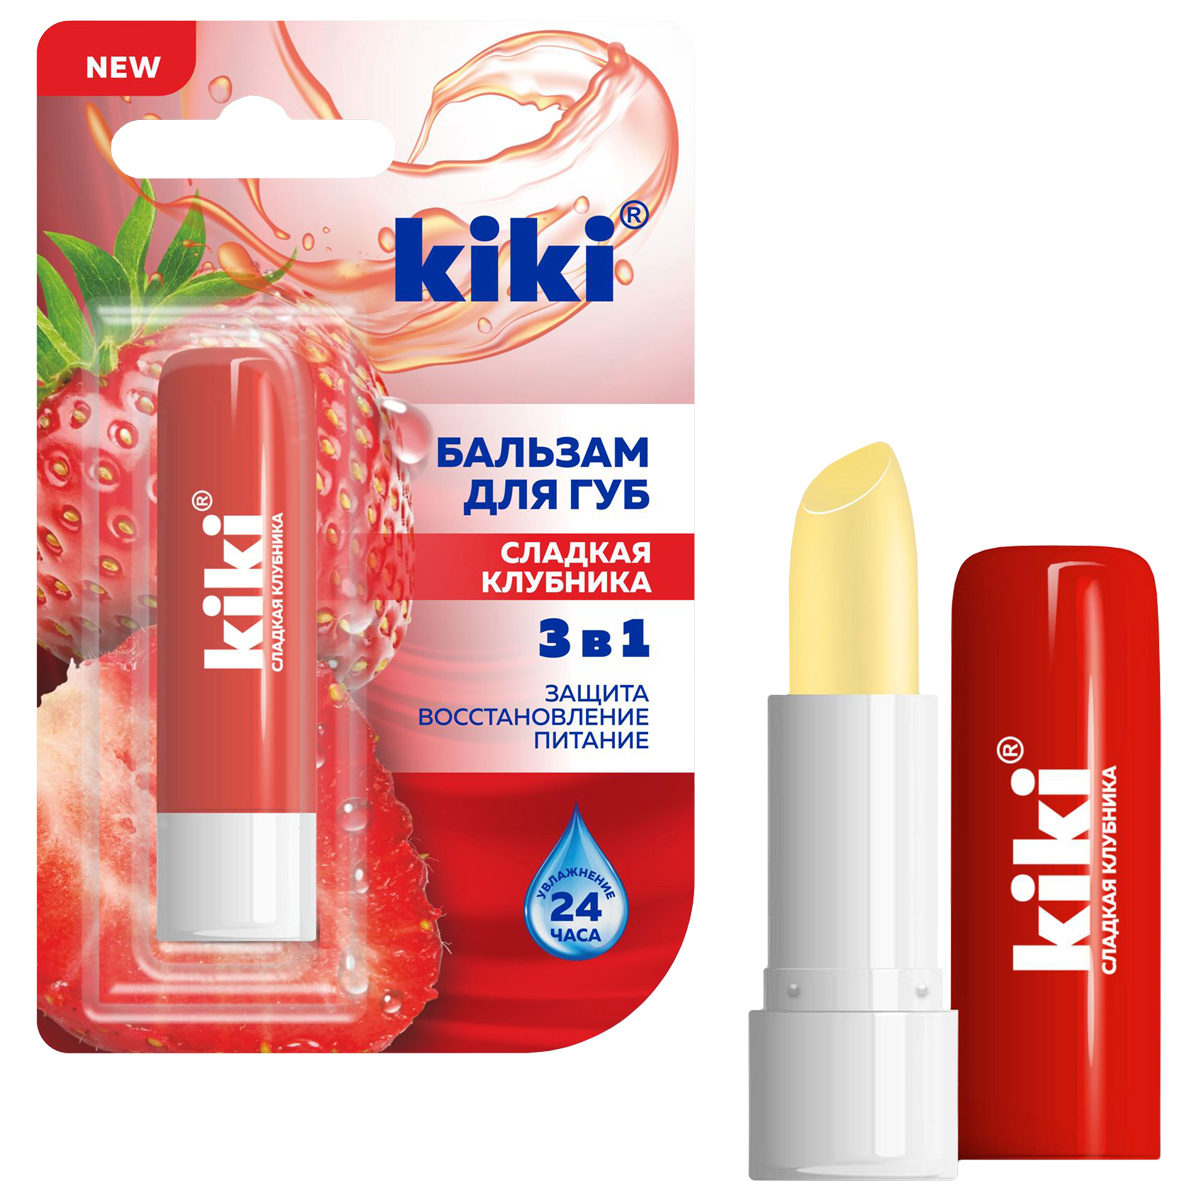 Бальзам для губ Kiki ухаживающий Сладкая клубника бальзам для губ kiki ухаживающий спелая вишня